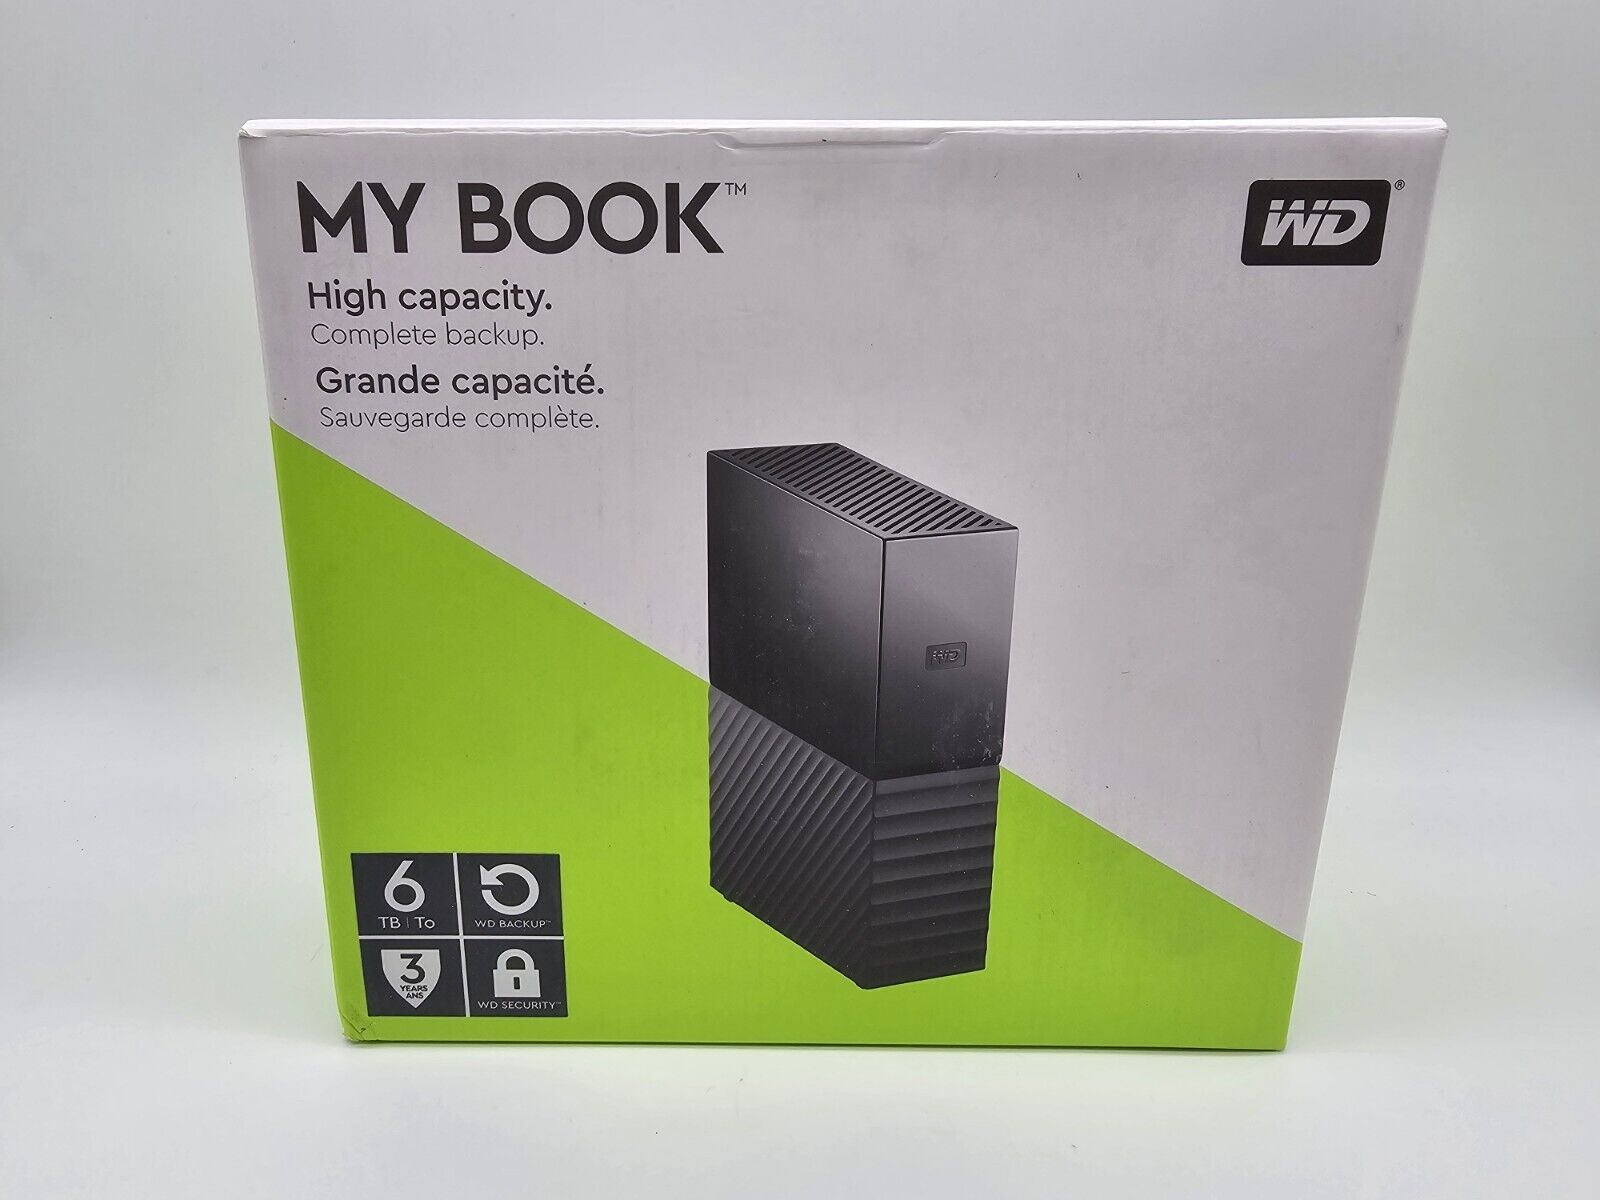 Western Digital WD My Book 6TB High Capacity External USB 3.0 Hard Disk Drive